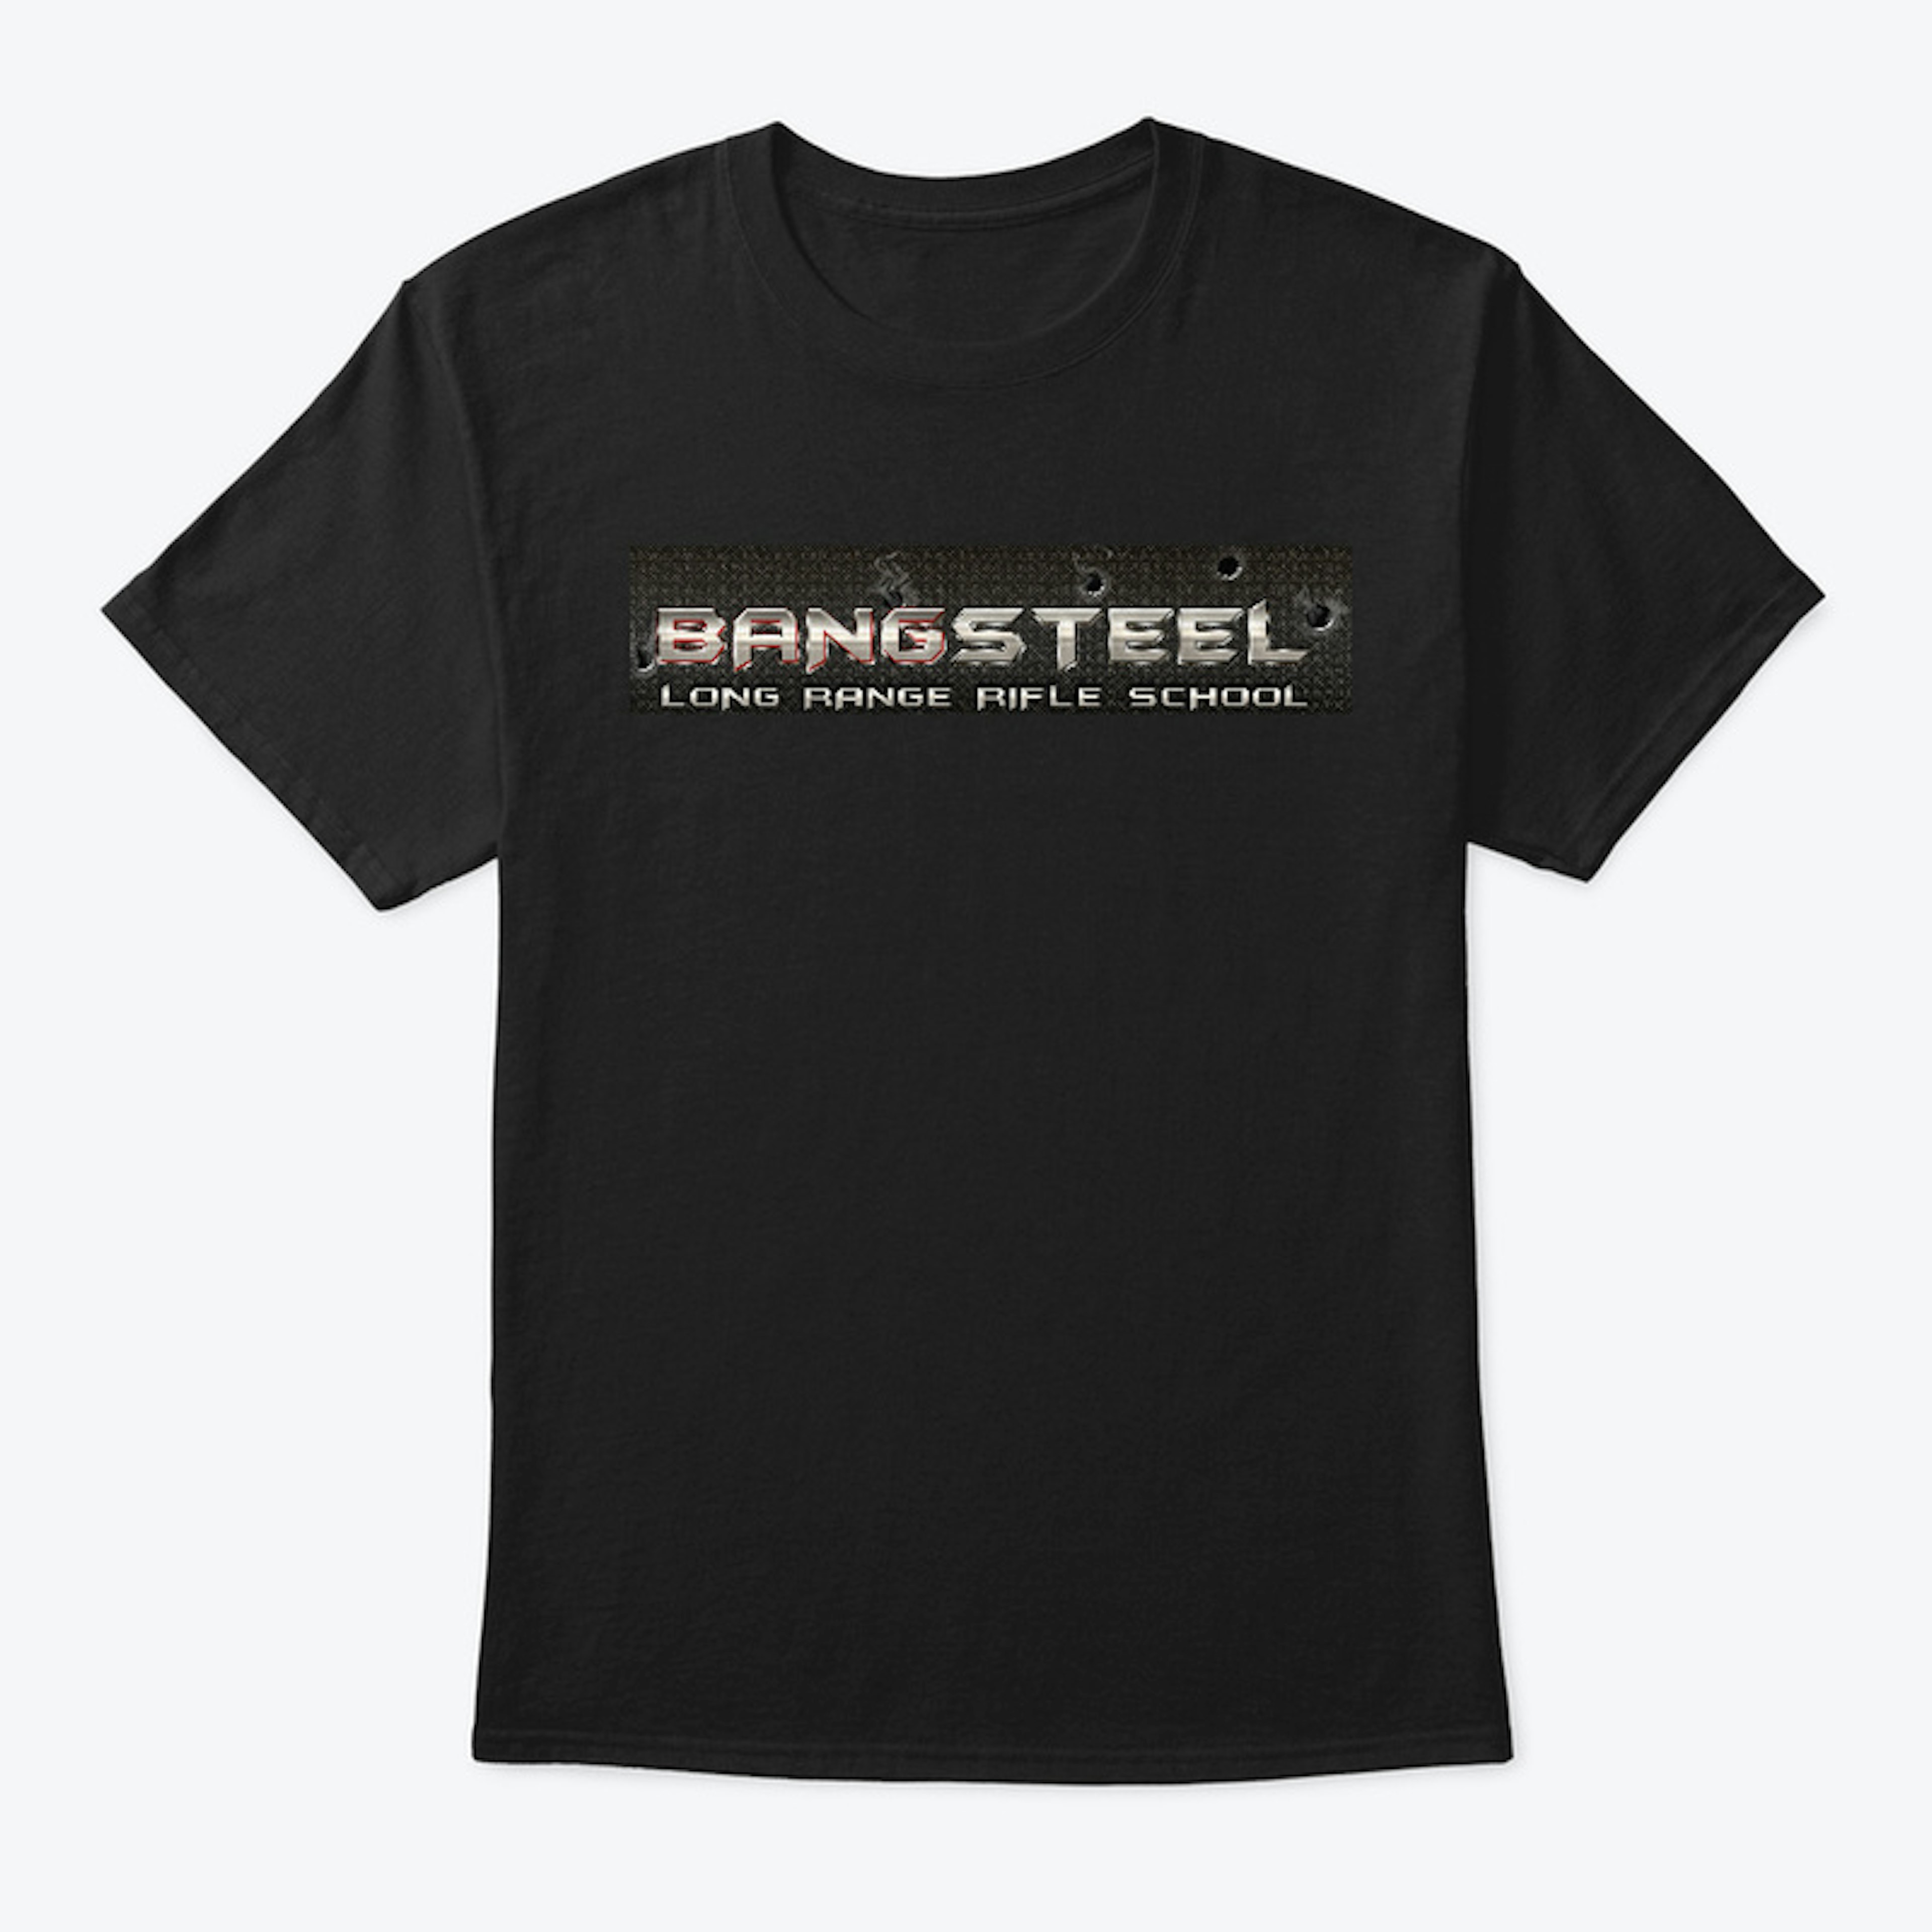 Basic BangSteel t-shirt